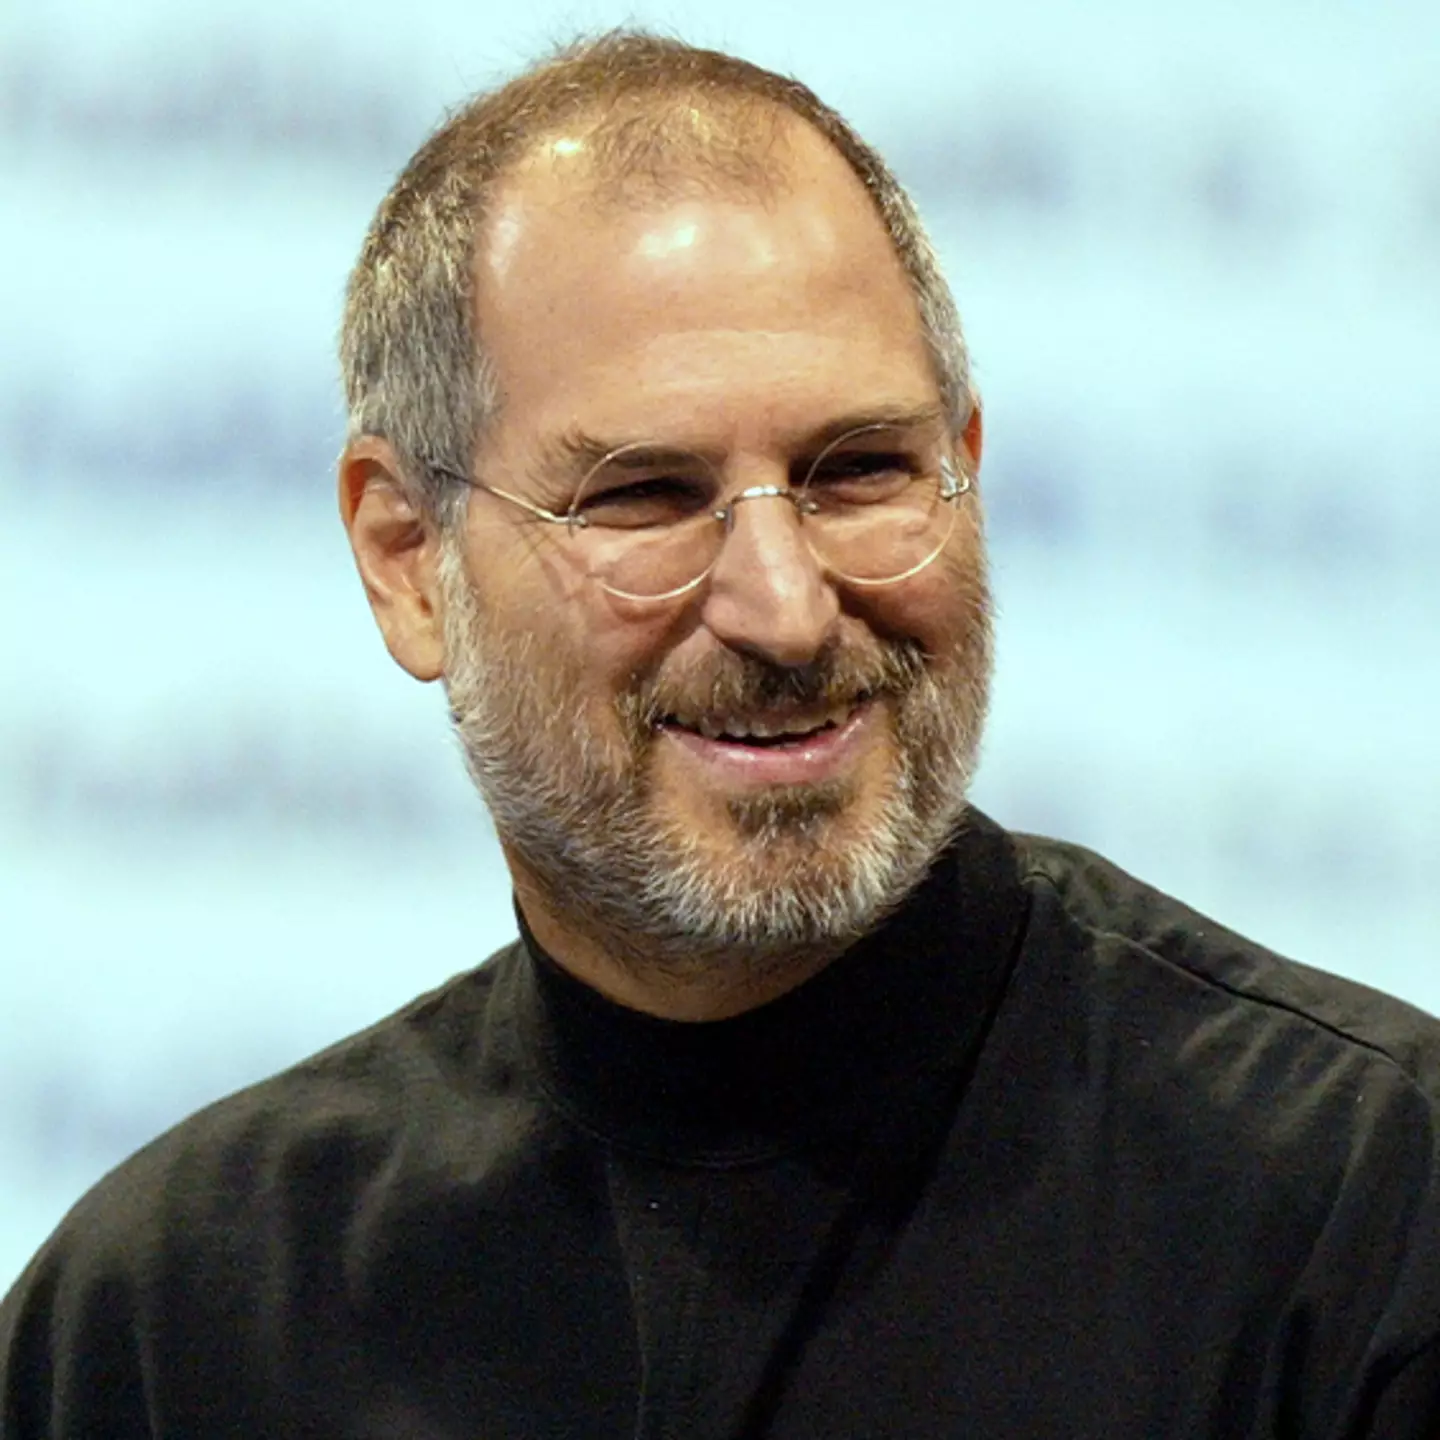 Jobseekers react to 'beer test' Steve Jobs used to interview people at Apple